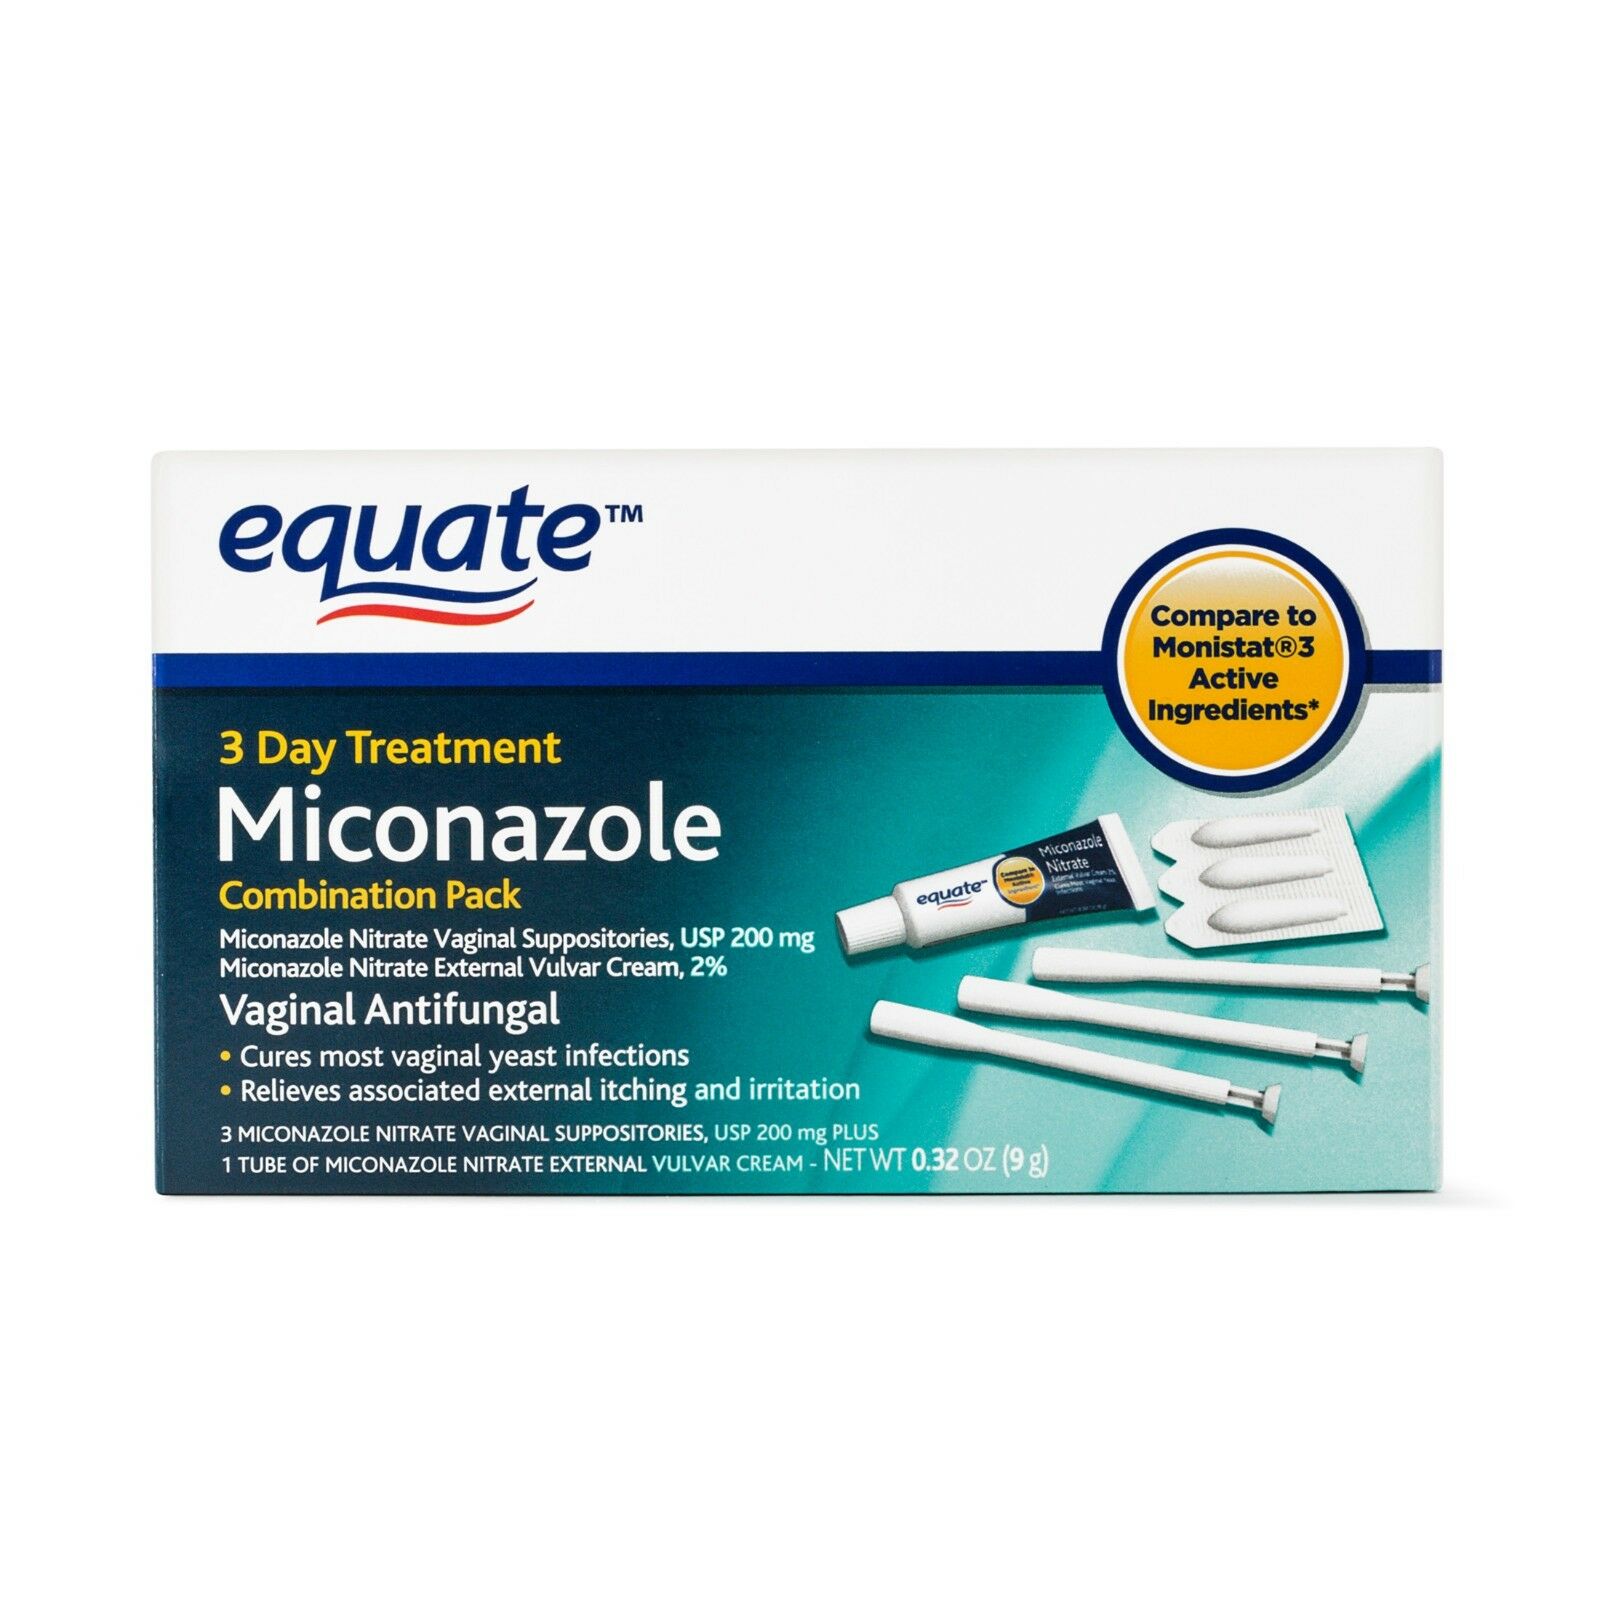 Equate Miconazole 3 Day Treatment Vaginal Antifungal Monistat, 0.32oz Exp 03/21